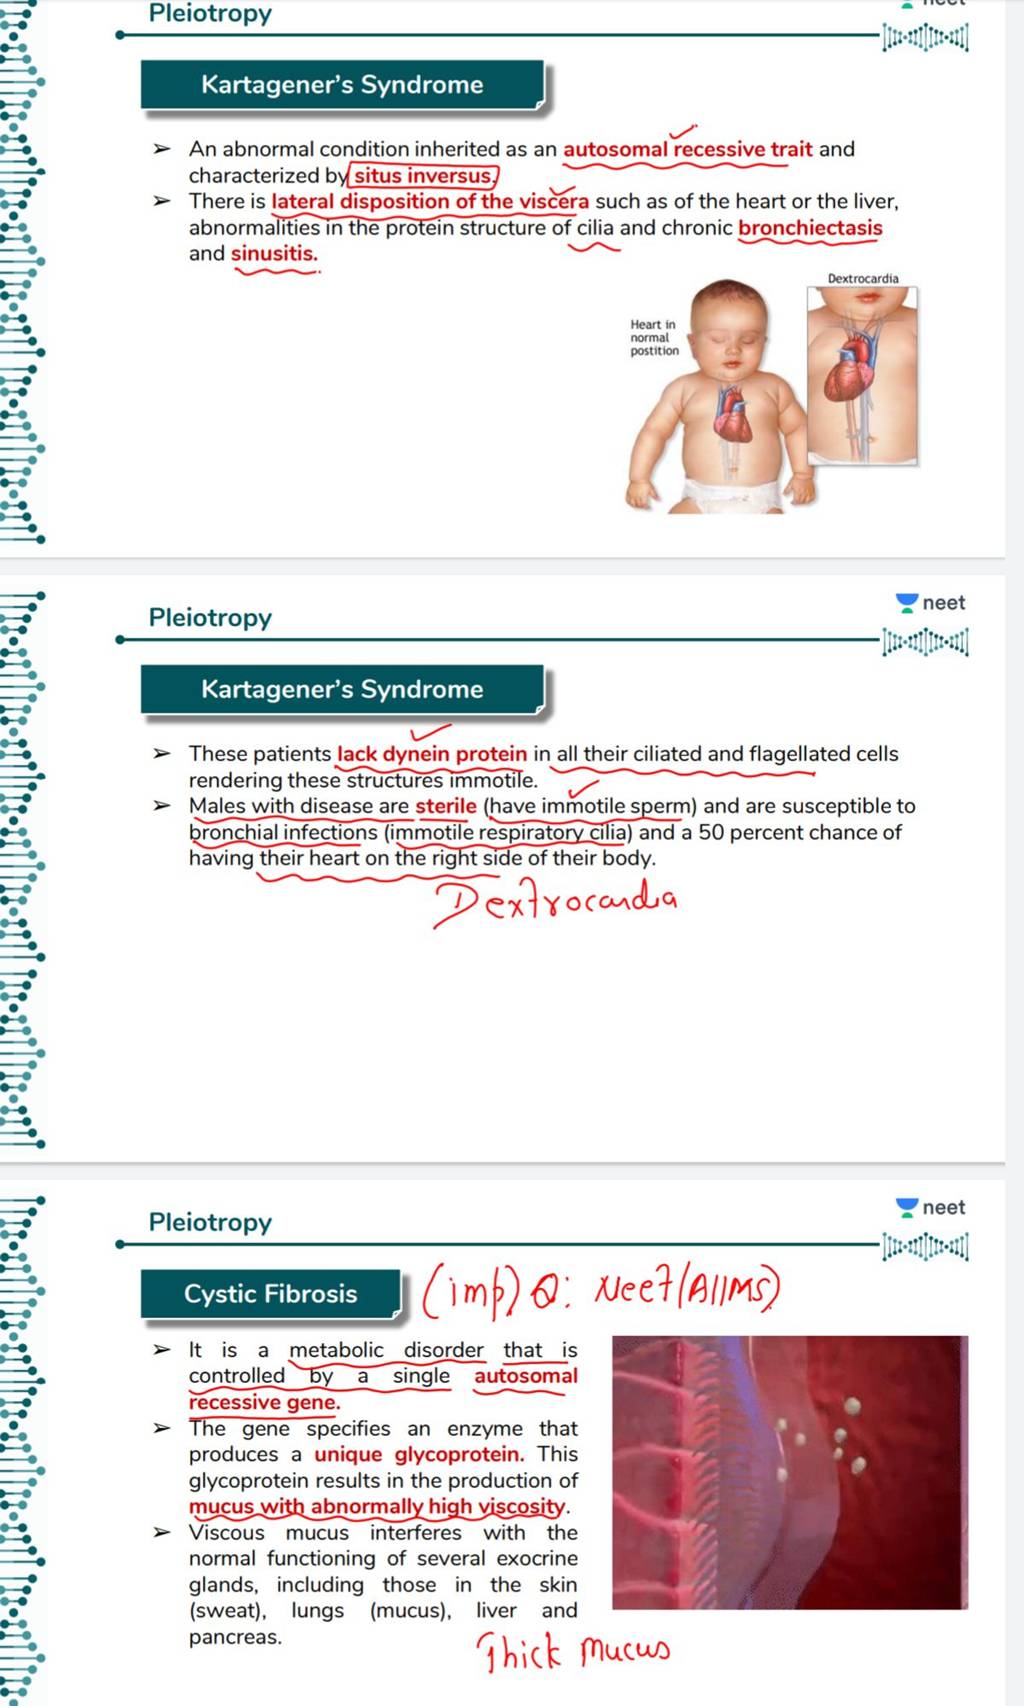 PleiotropyKartagener's Syndrome> An abnormal condition inherited as an